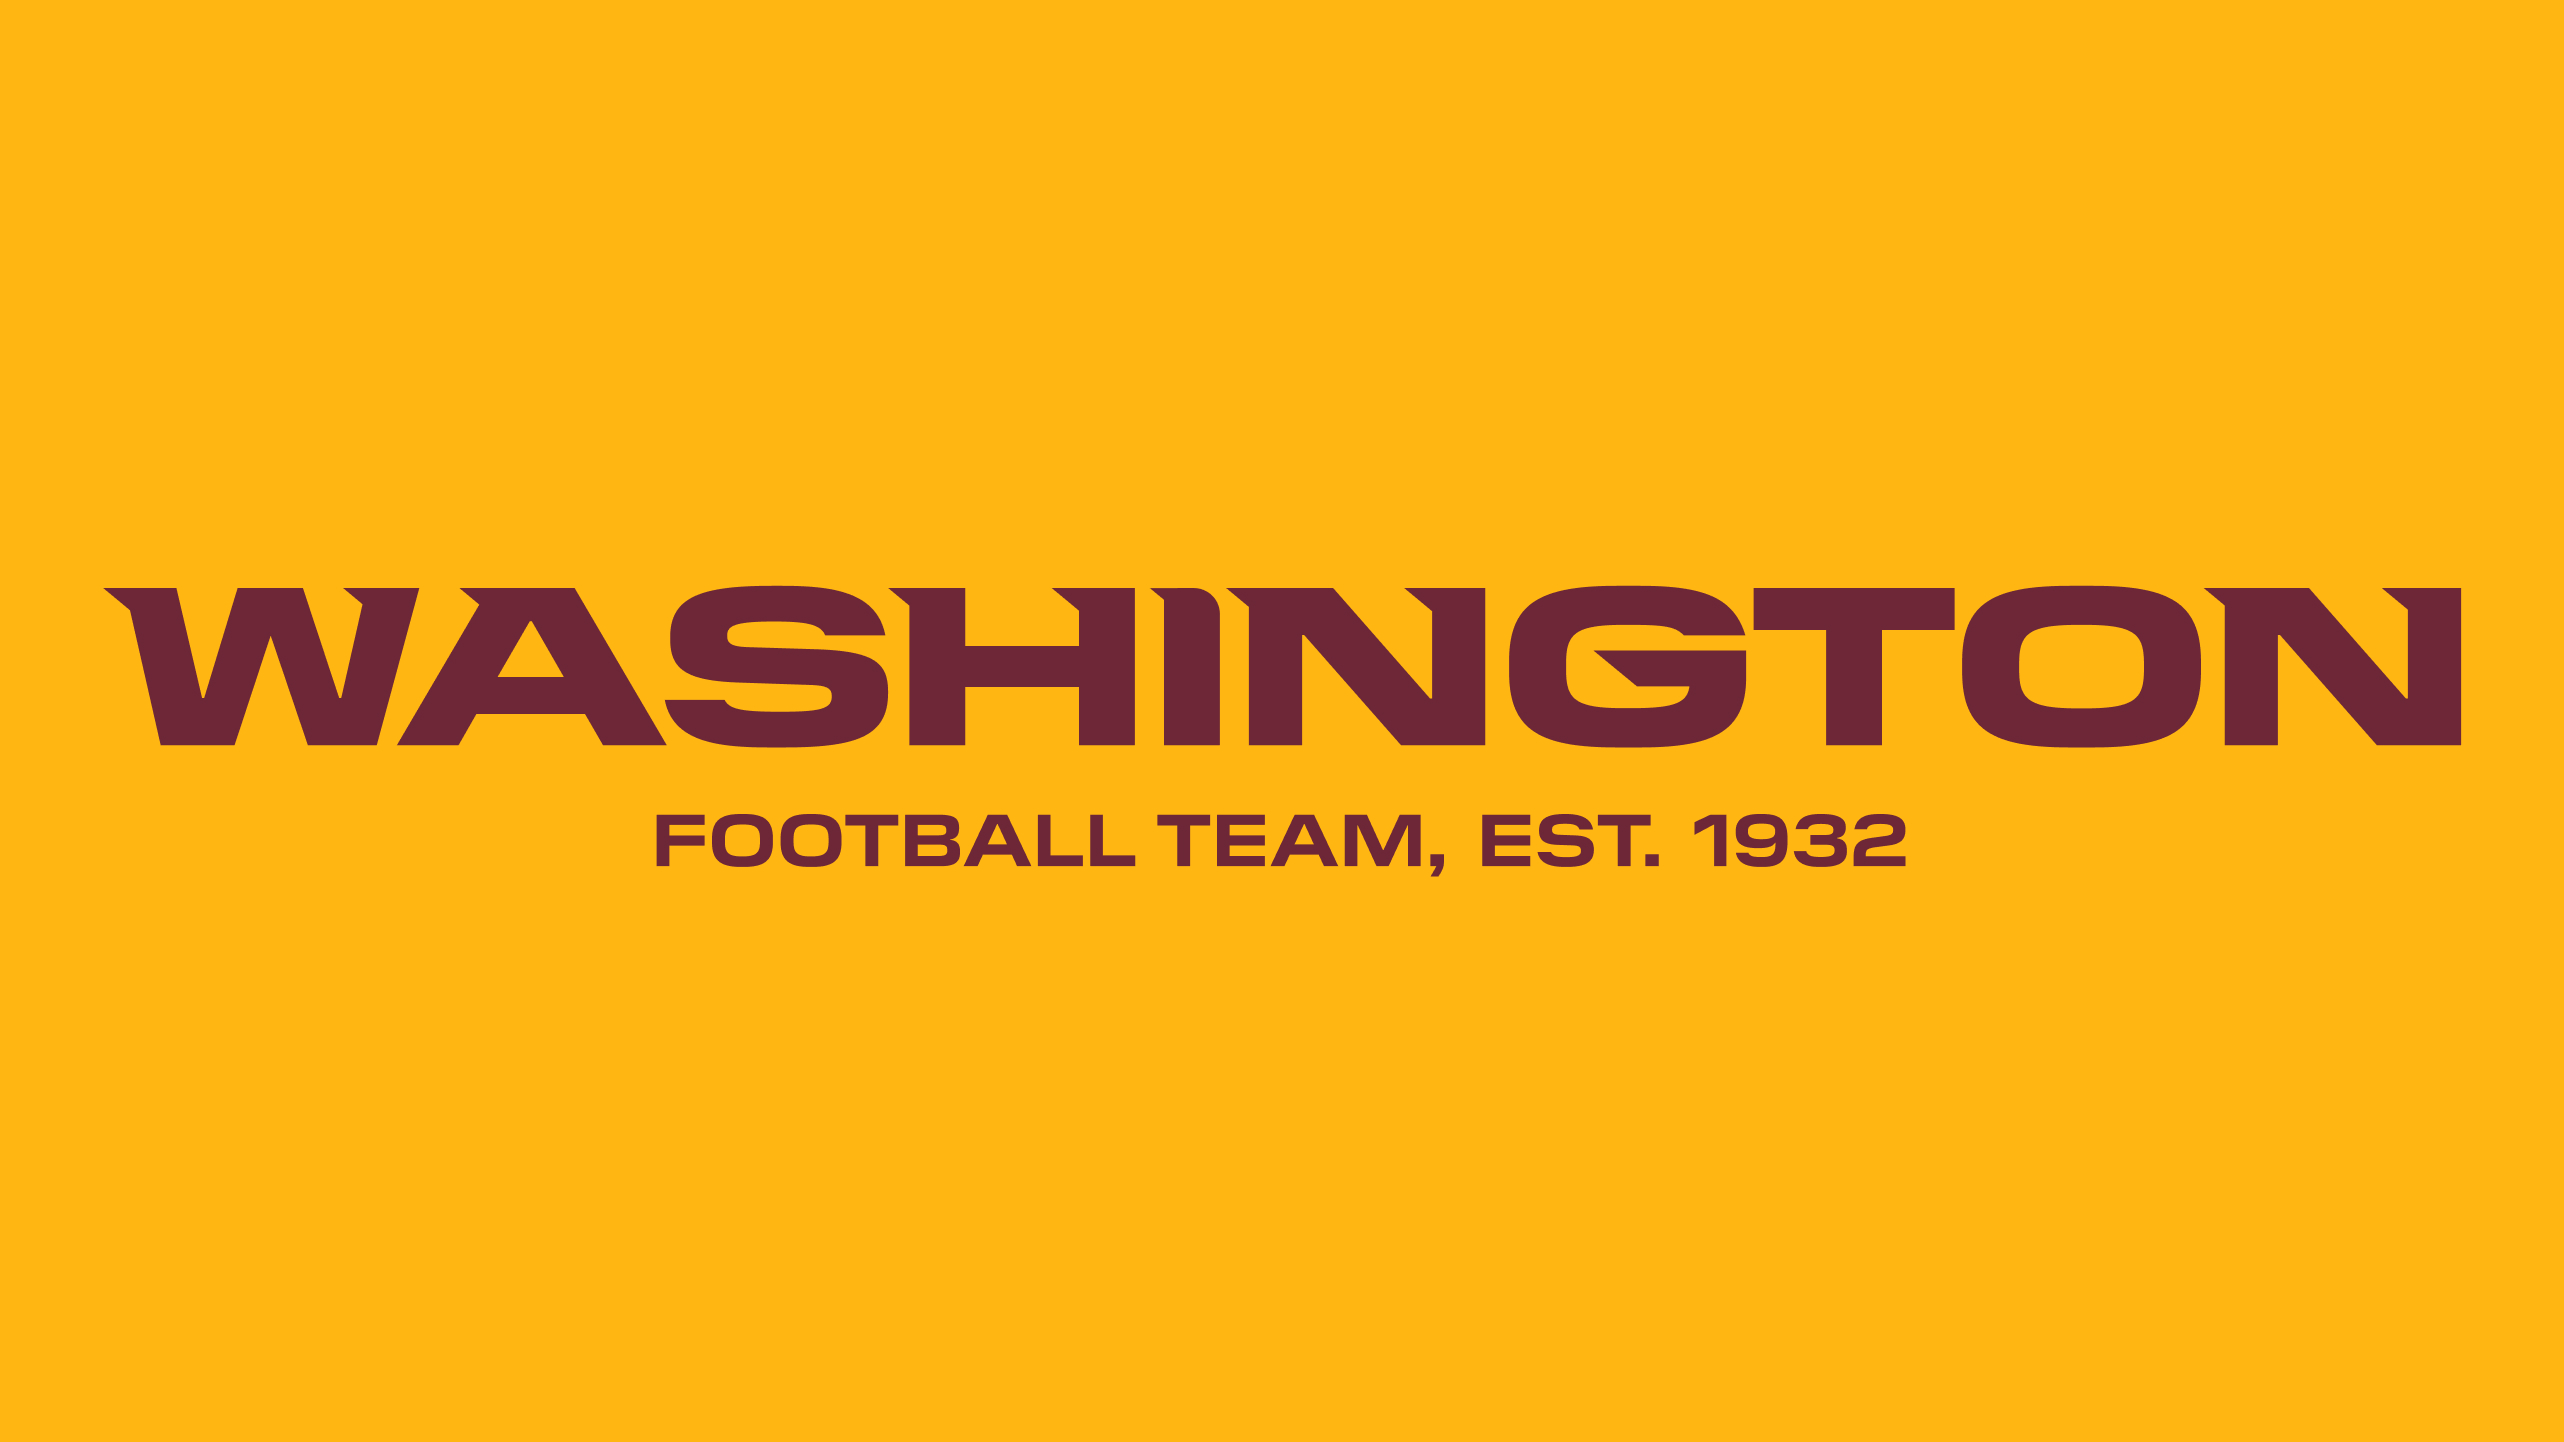 Ex-Redskins to become 'Washington Football Team' for 2020 season